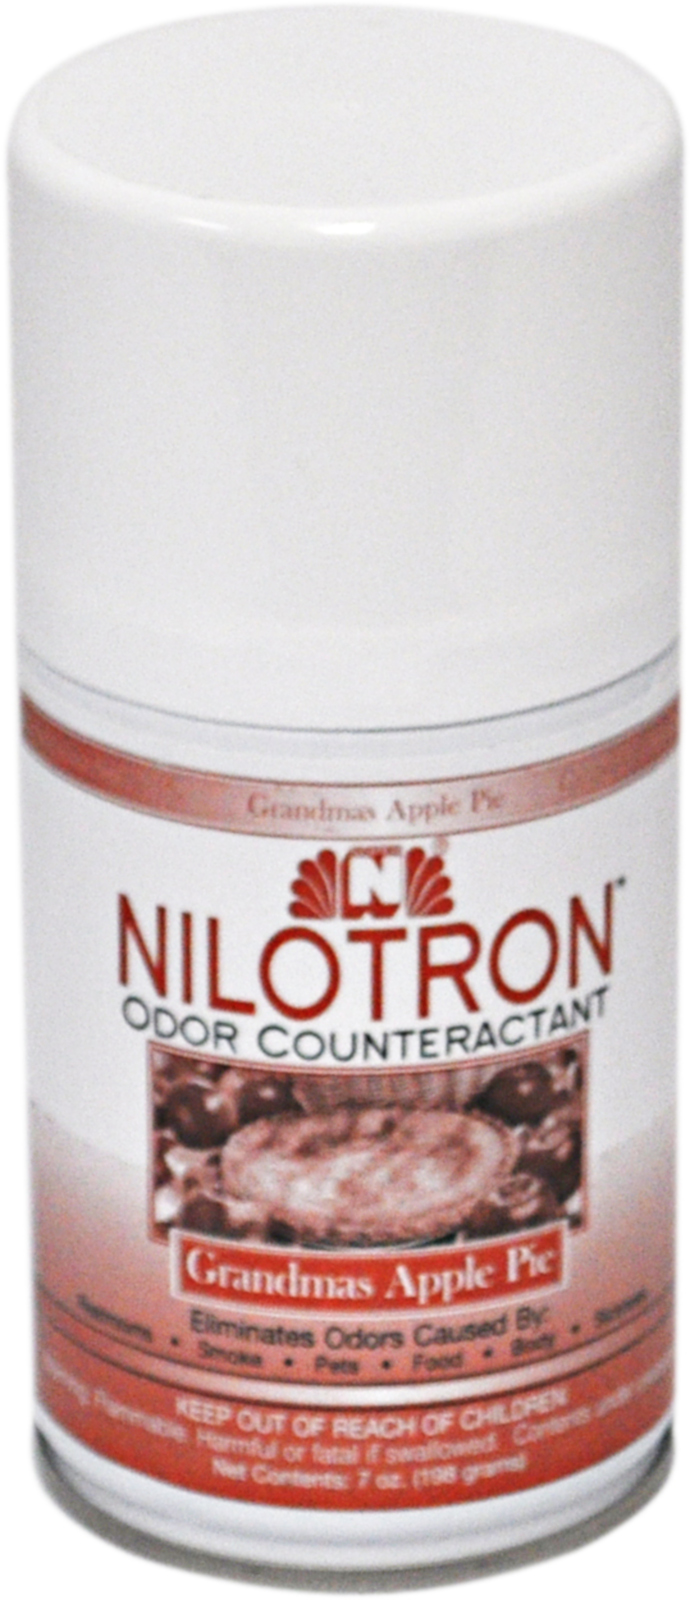 Nilotron Grandmas Apple Pie 7 Oz. Odor Countercactant Metered Refill CS-8605